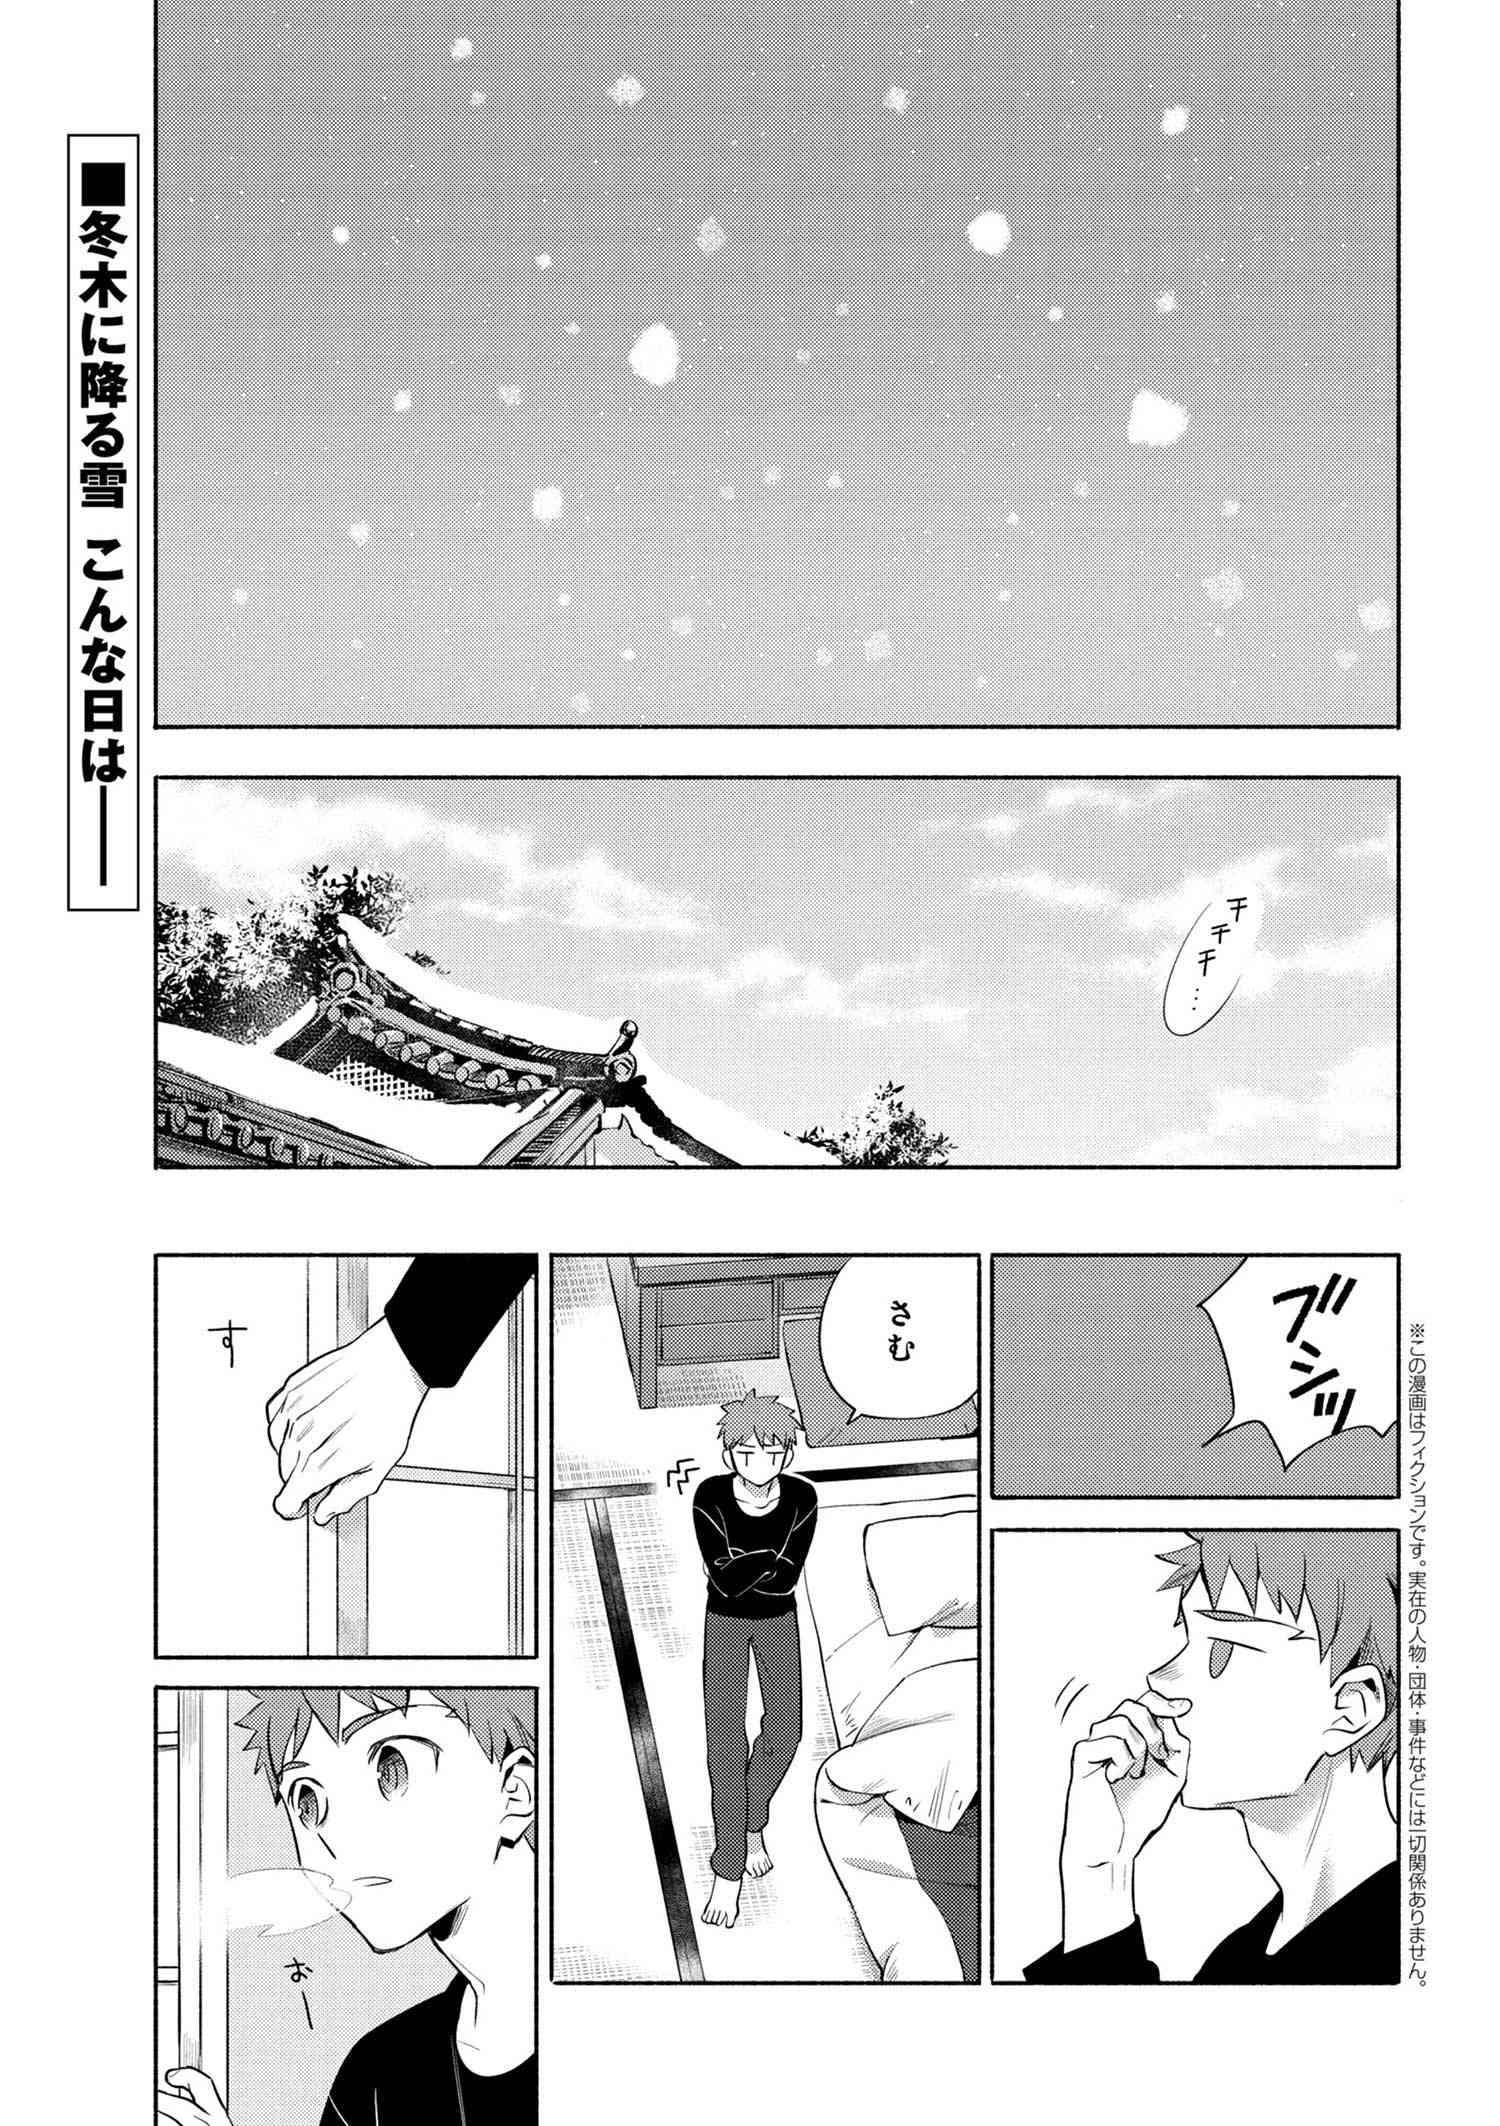 Emiya-san Chi no Kyou no Gohan - Chapter 12 - Page 1